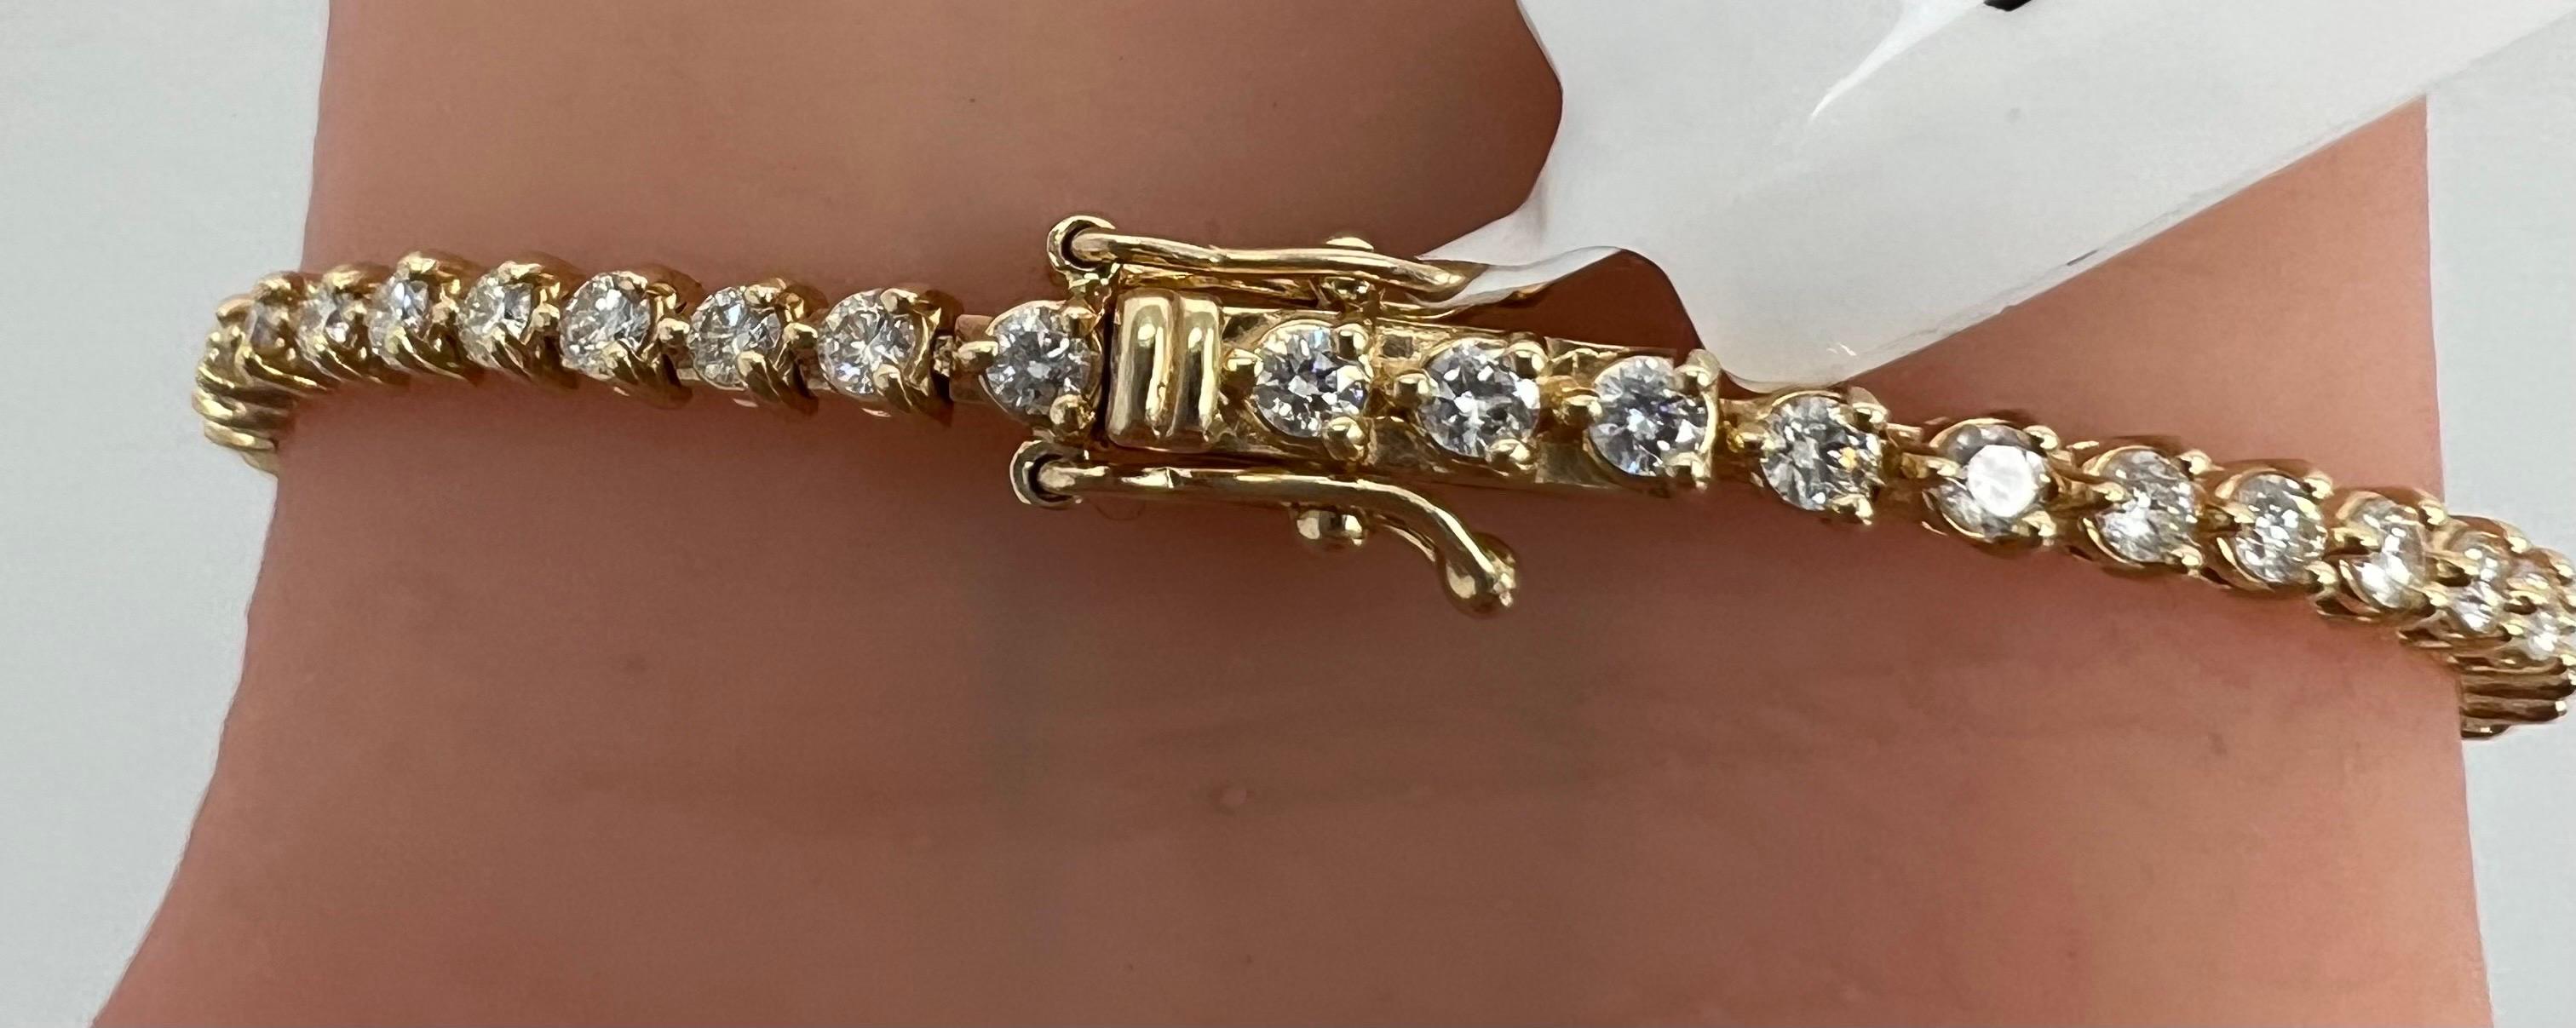 14K Yellow Gold Tennis Bracelet, 2.10 CT of Natural Full Cut Diamonds, 3 prongs For Sale 2